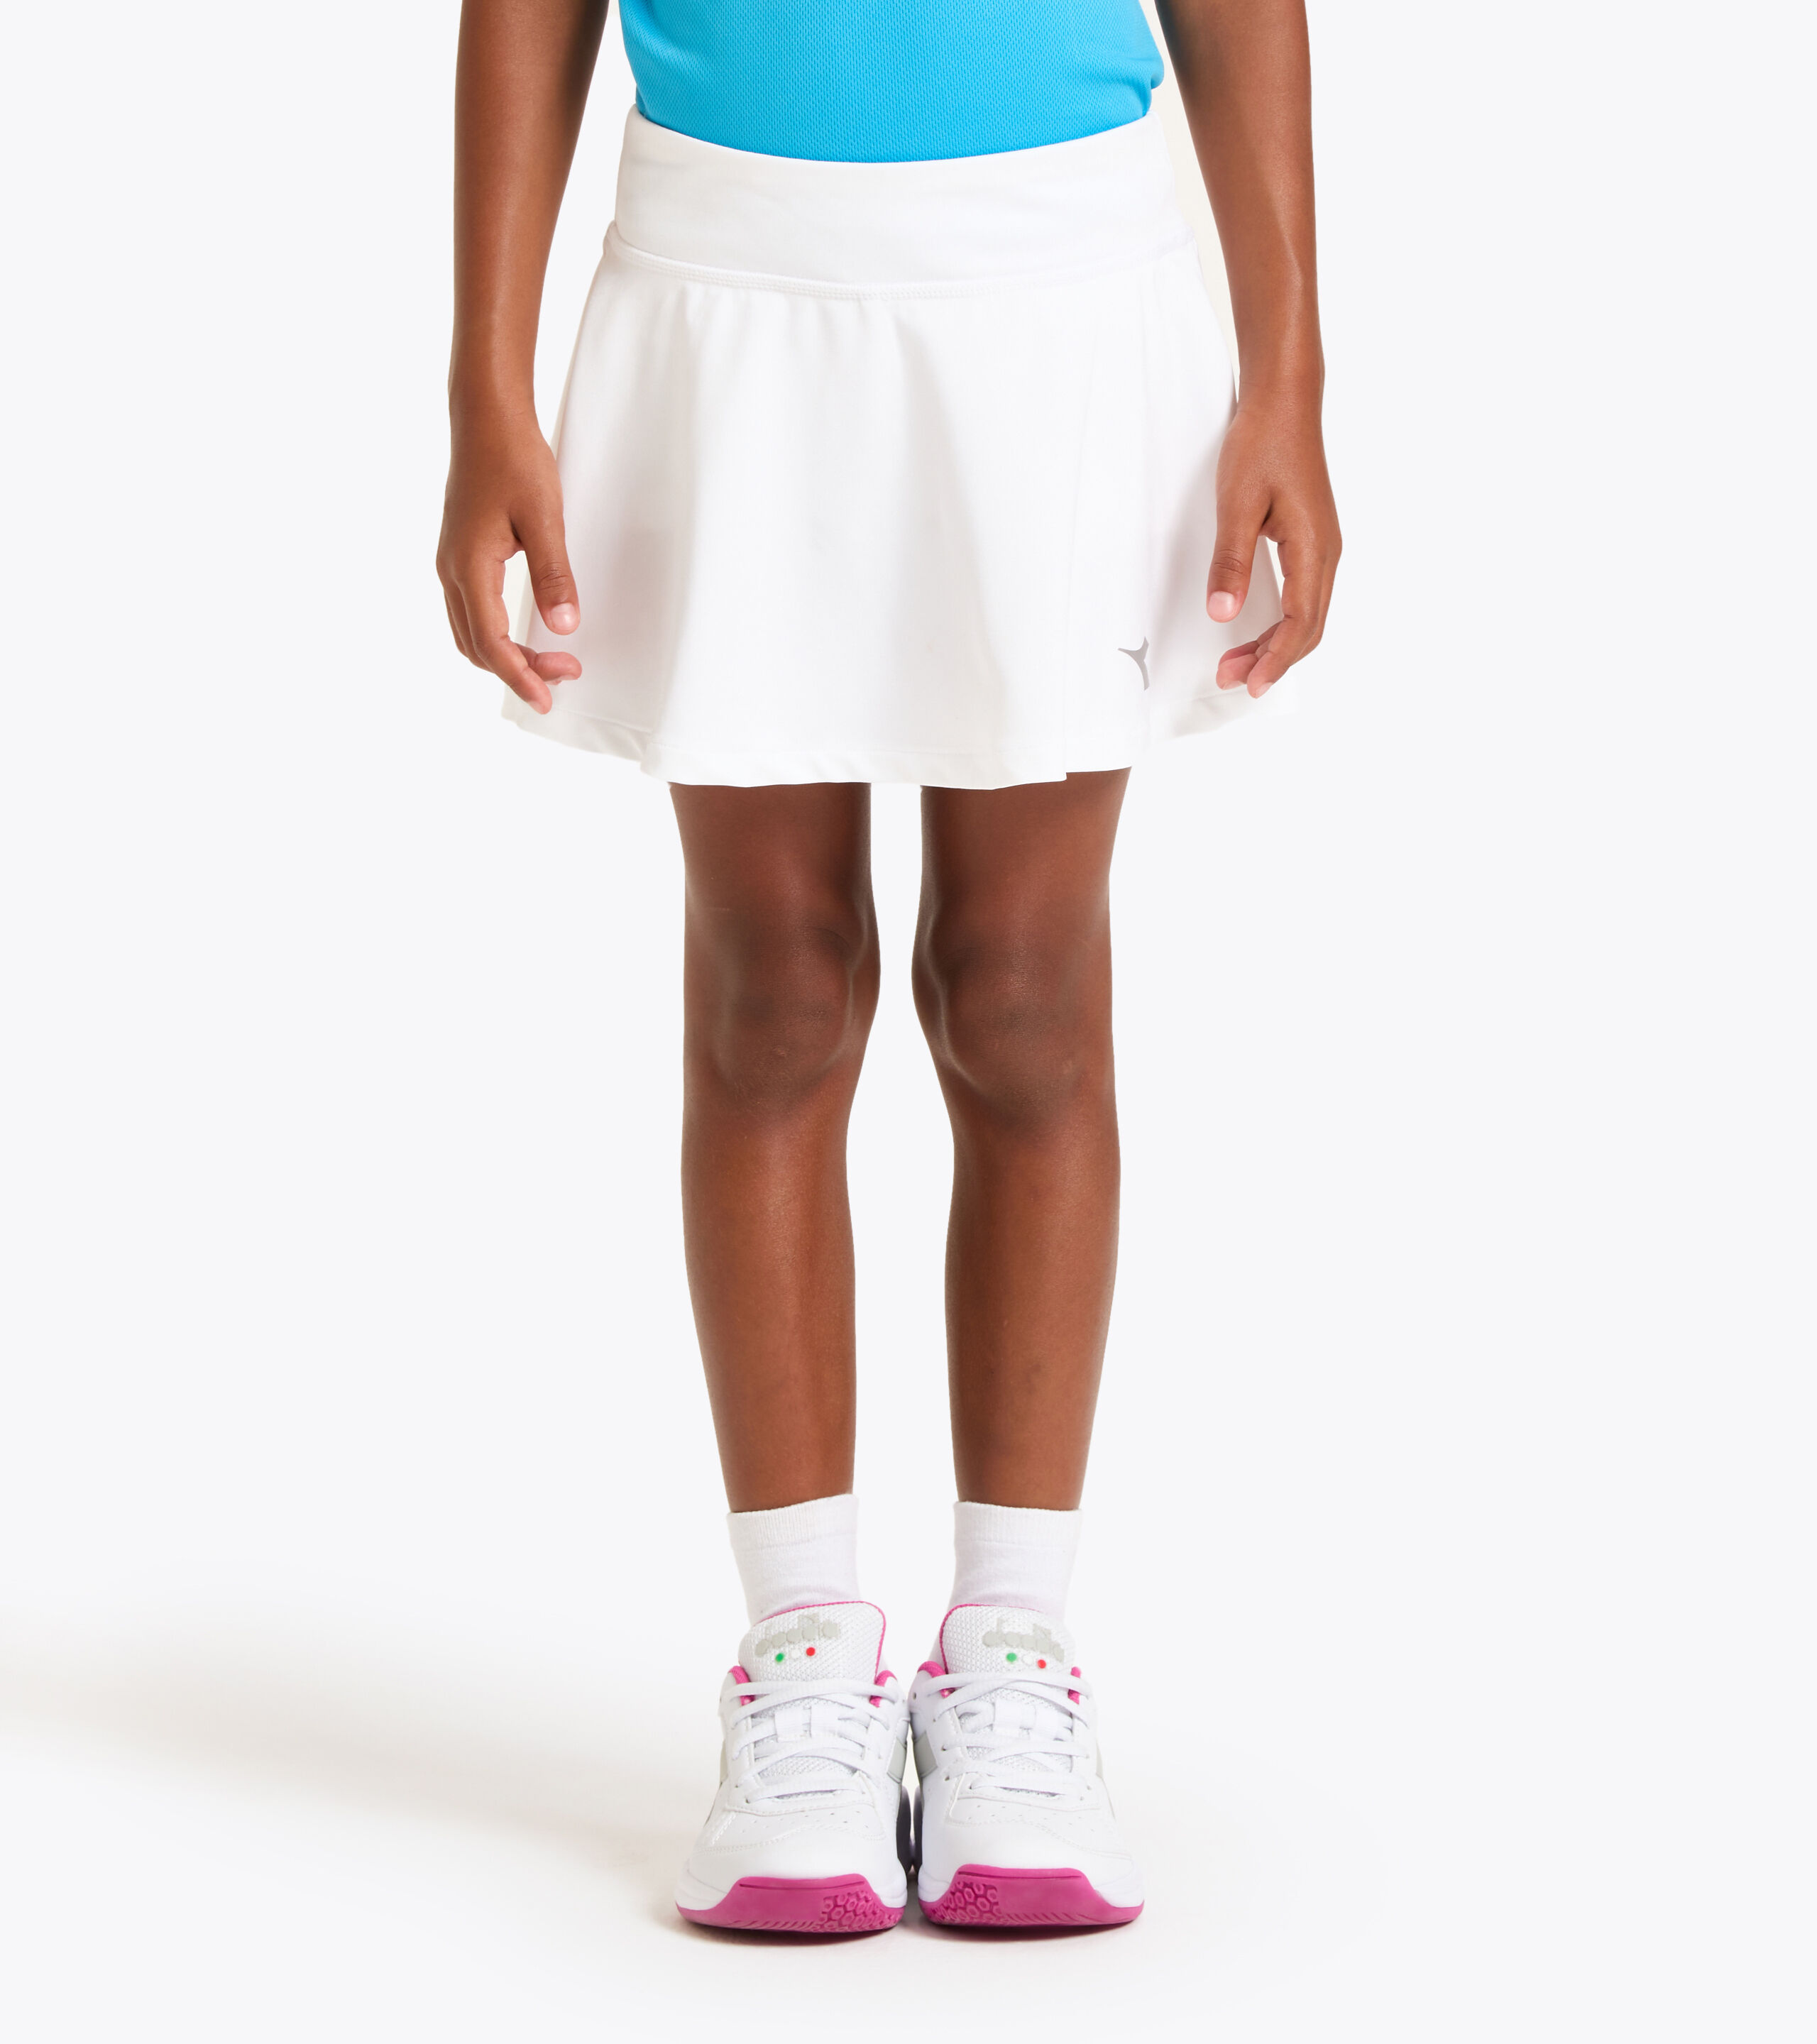 G. SKIRT COURT Tennis skirt - Junior 